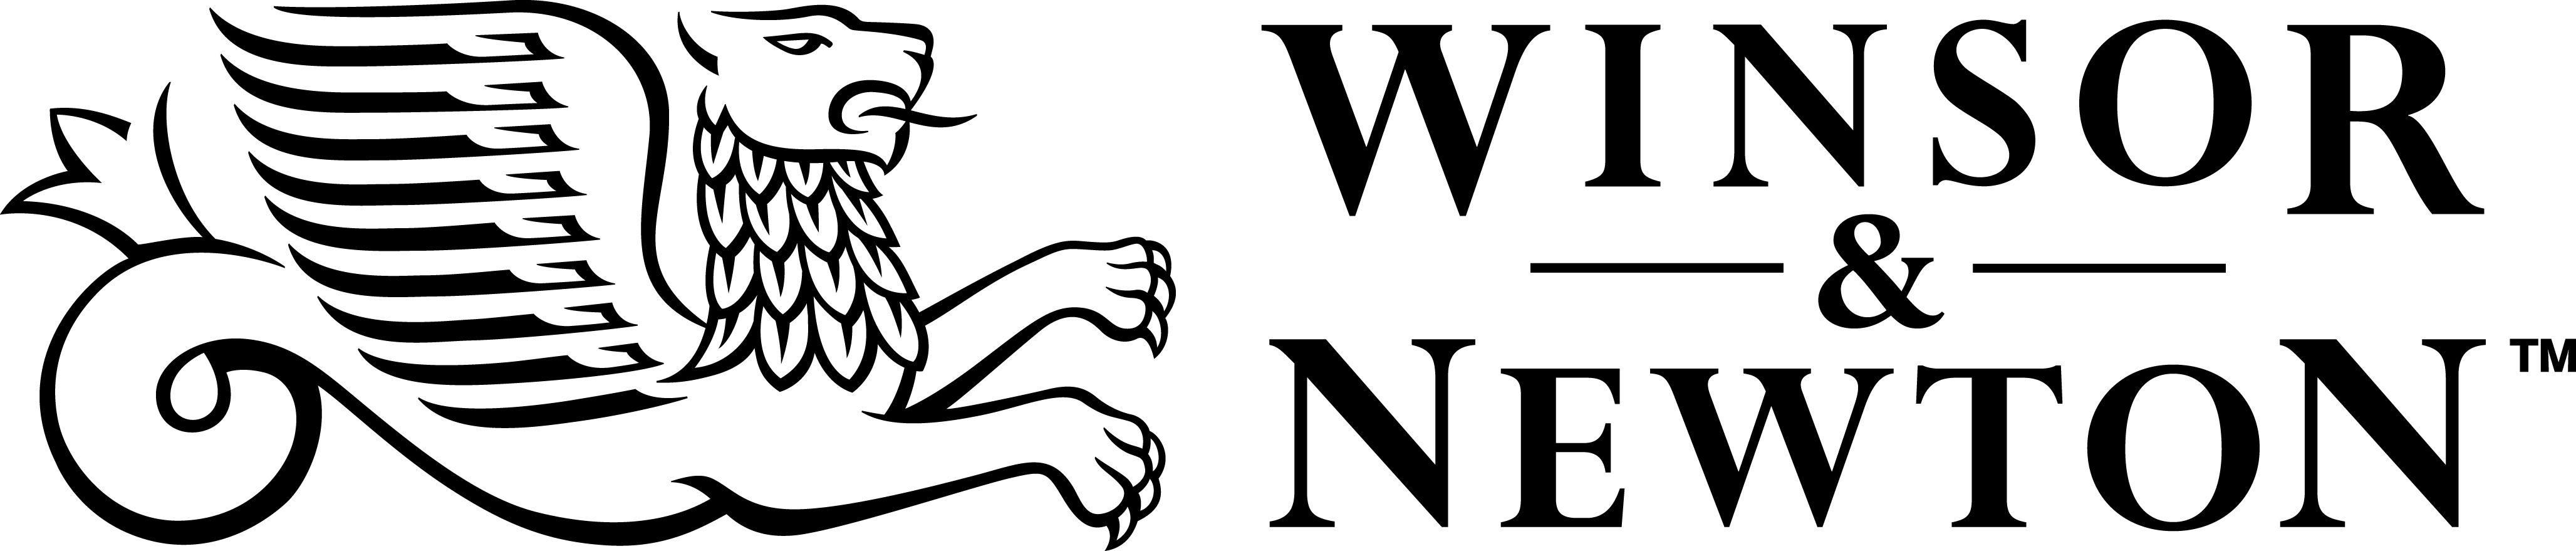 Winsor Logo - Sponsor Announcement: Winsor & Newton | USk Chicago Sketch Seminar 2016